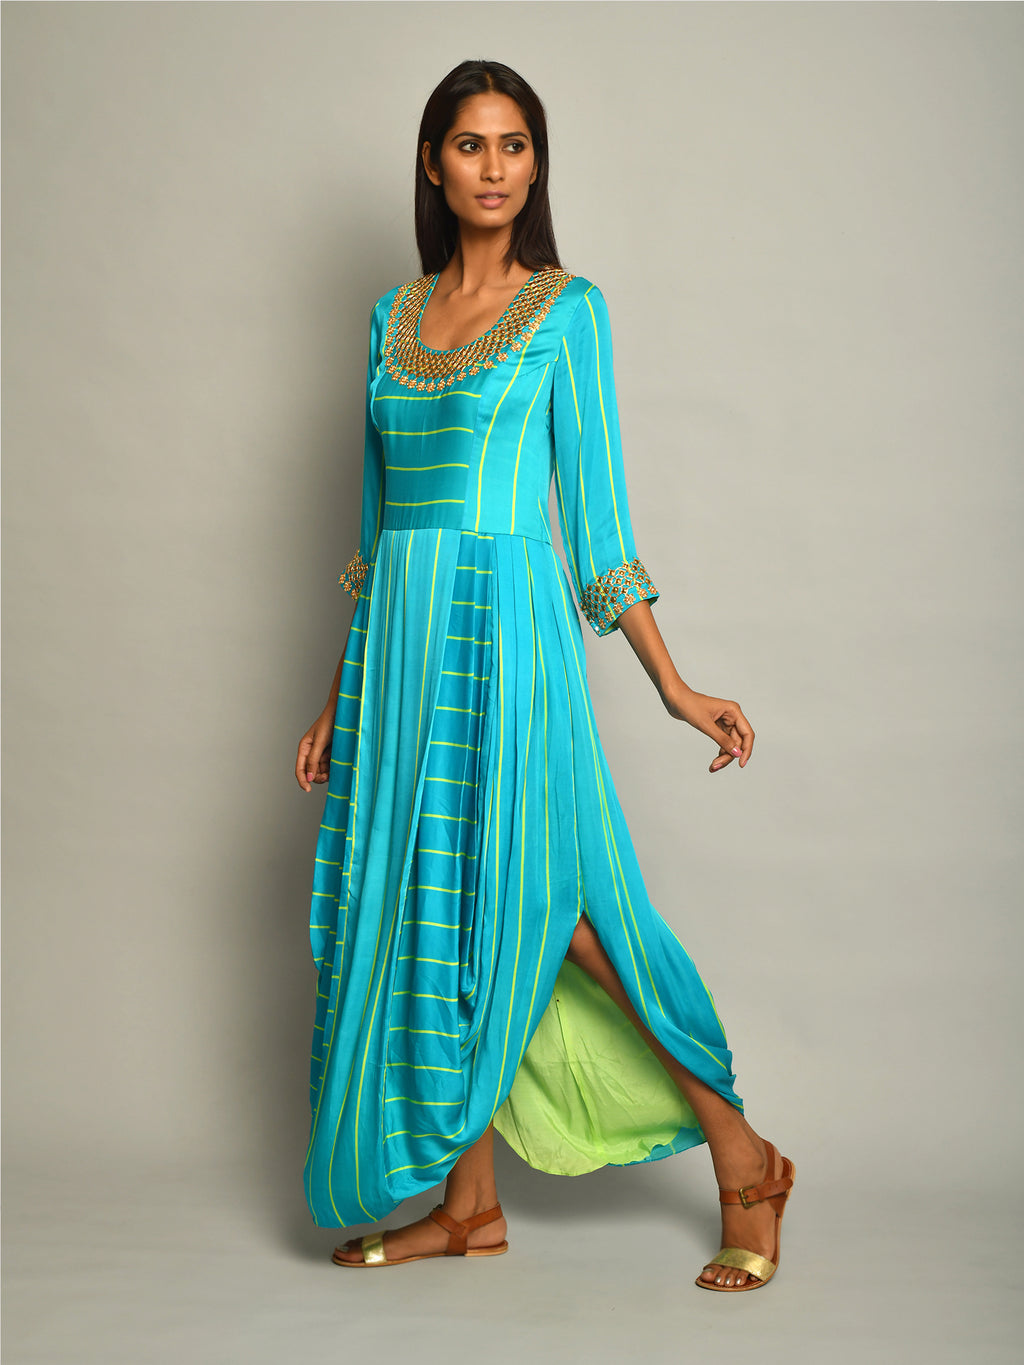 DRESS, dhoti dress, drape dress, contemporary indian apparel, indiandesignerwear, turquoise, embroidered, modern, indianapparel, swativijaivargie, festivewear, occasionwear